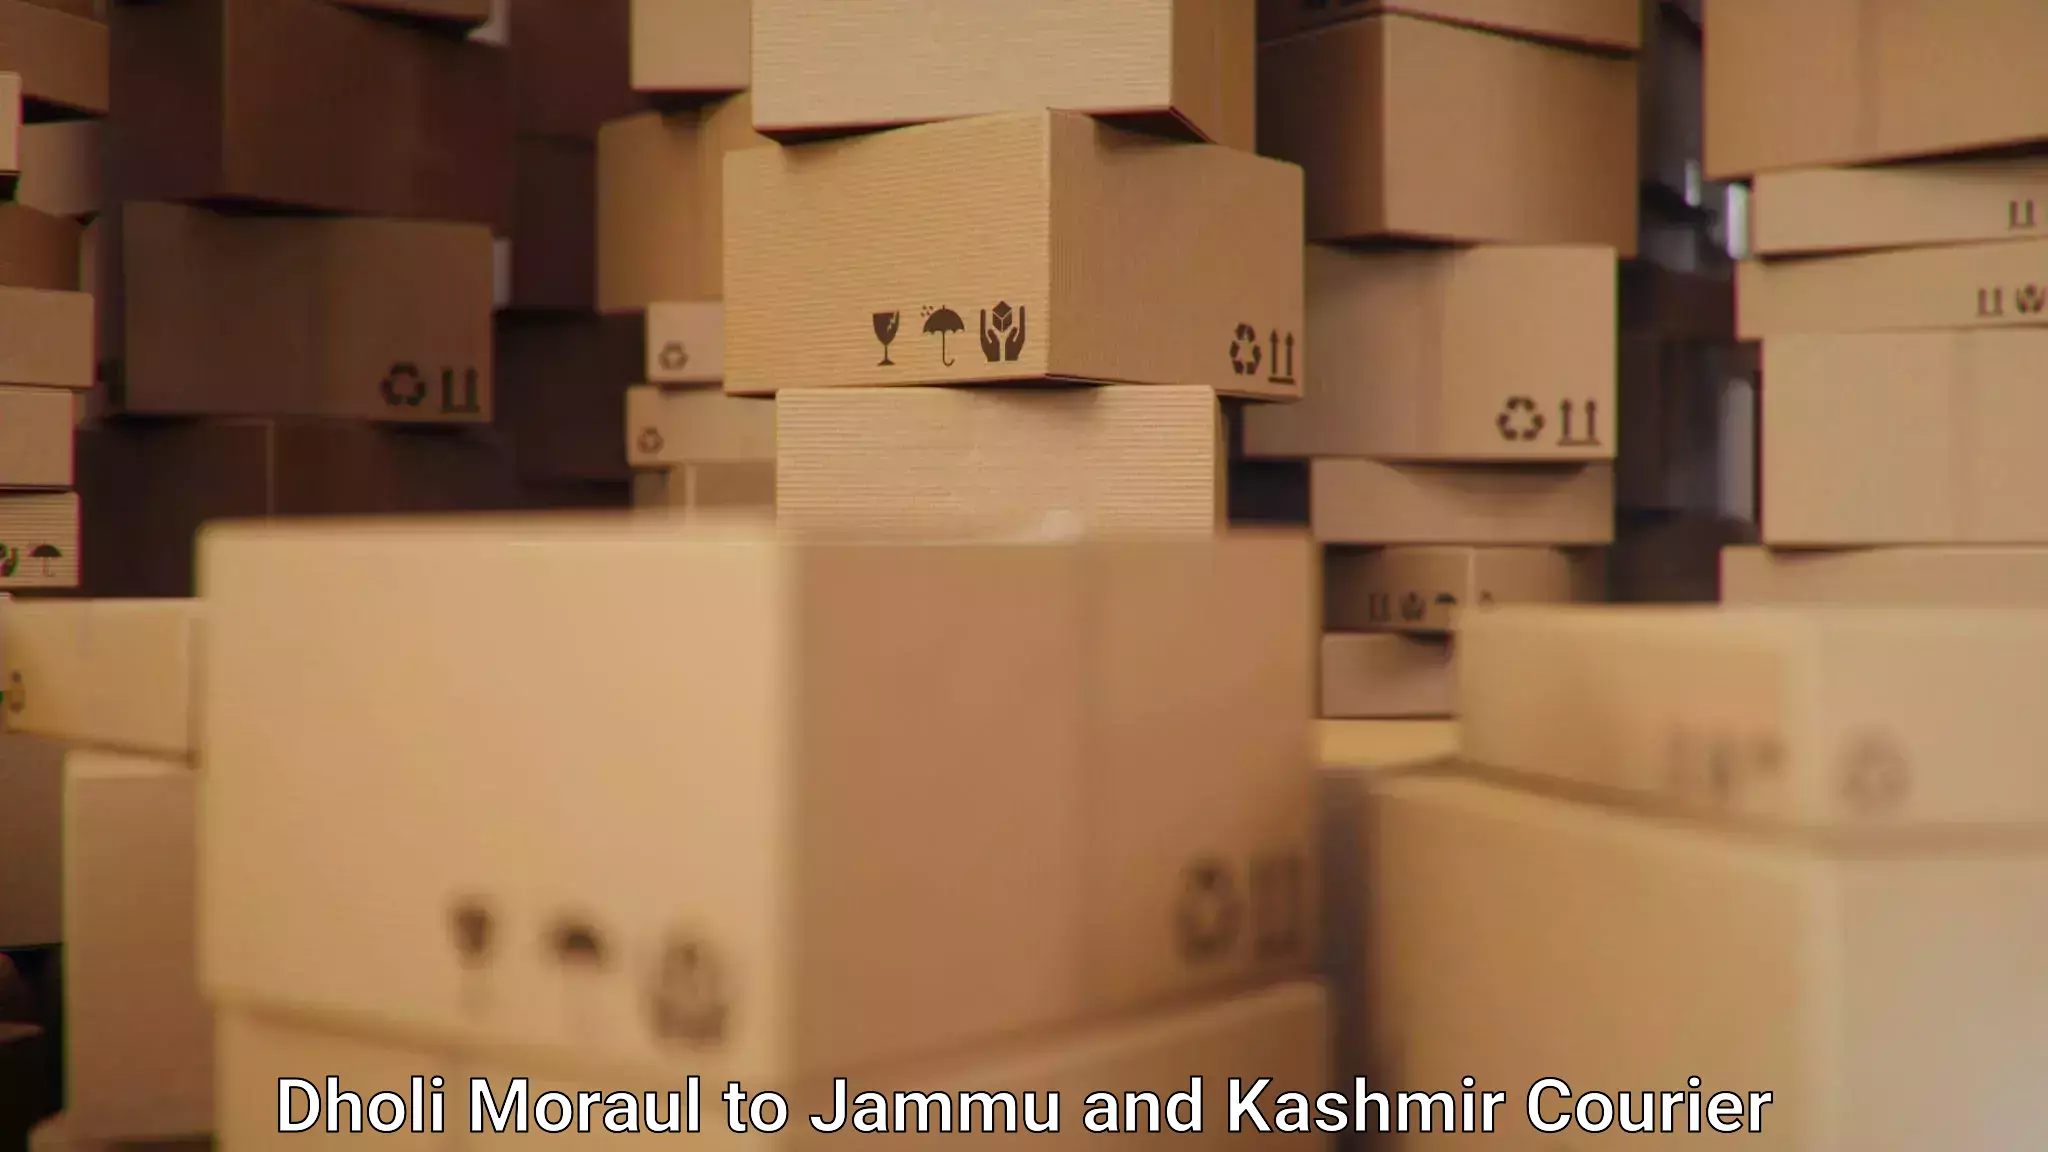 Global delivery options Dholi Moraul to Srinagar Kashmir